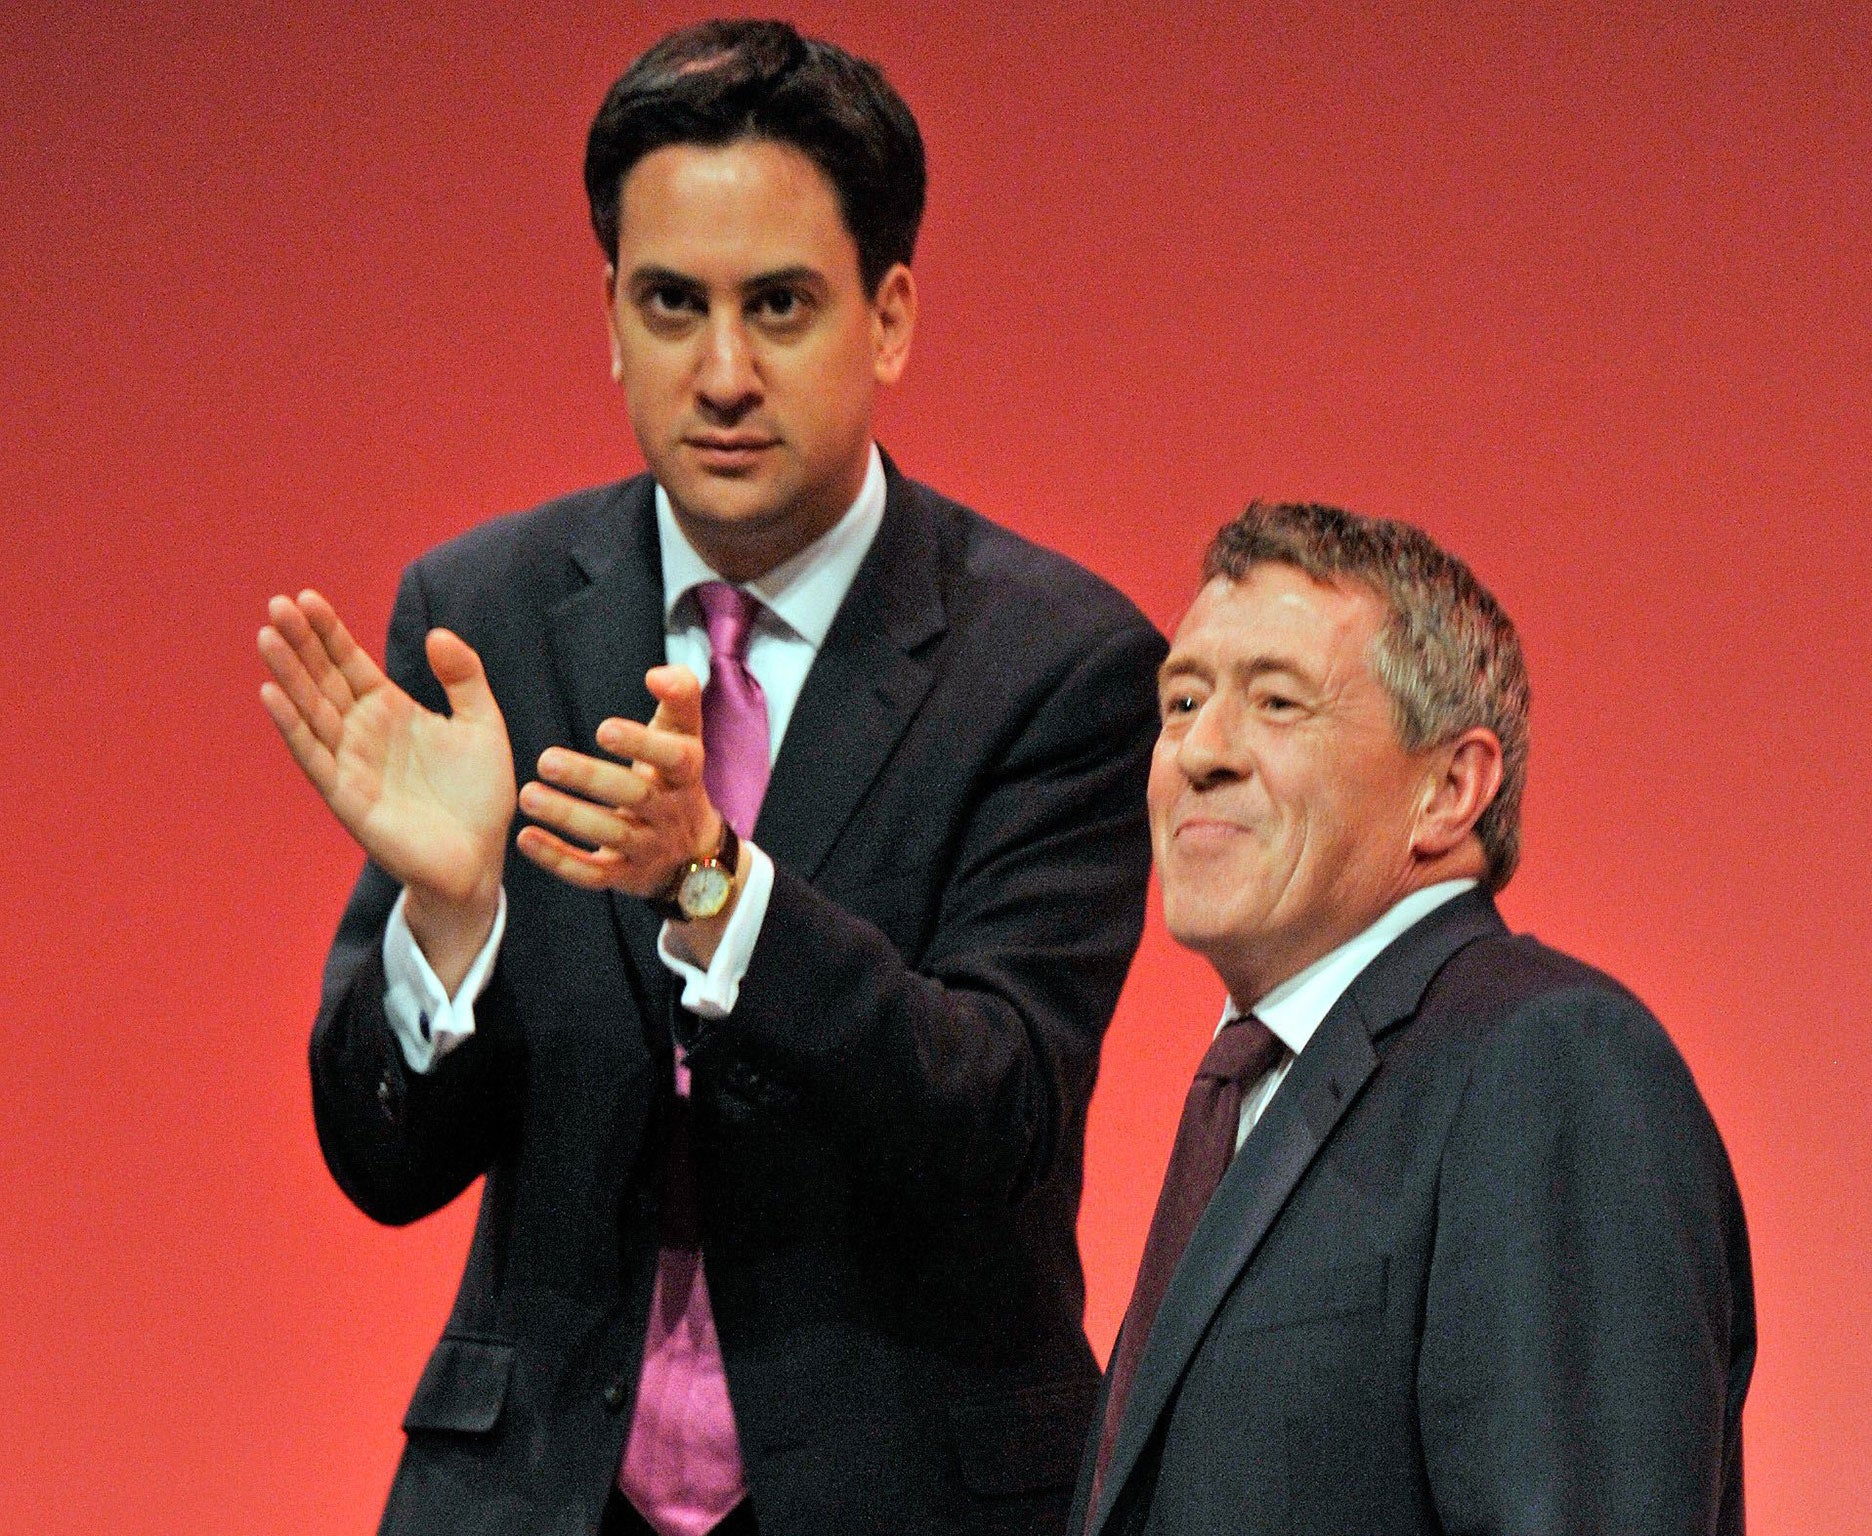 John Denham, right, was formerly Mr. Miliband's parliamentary aide